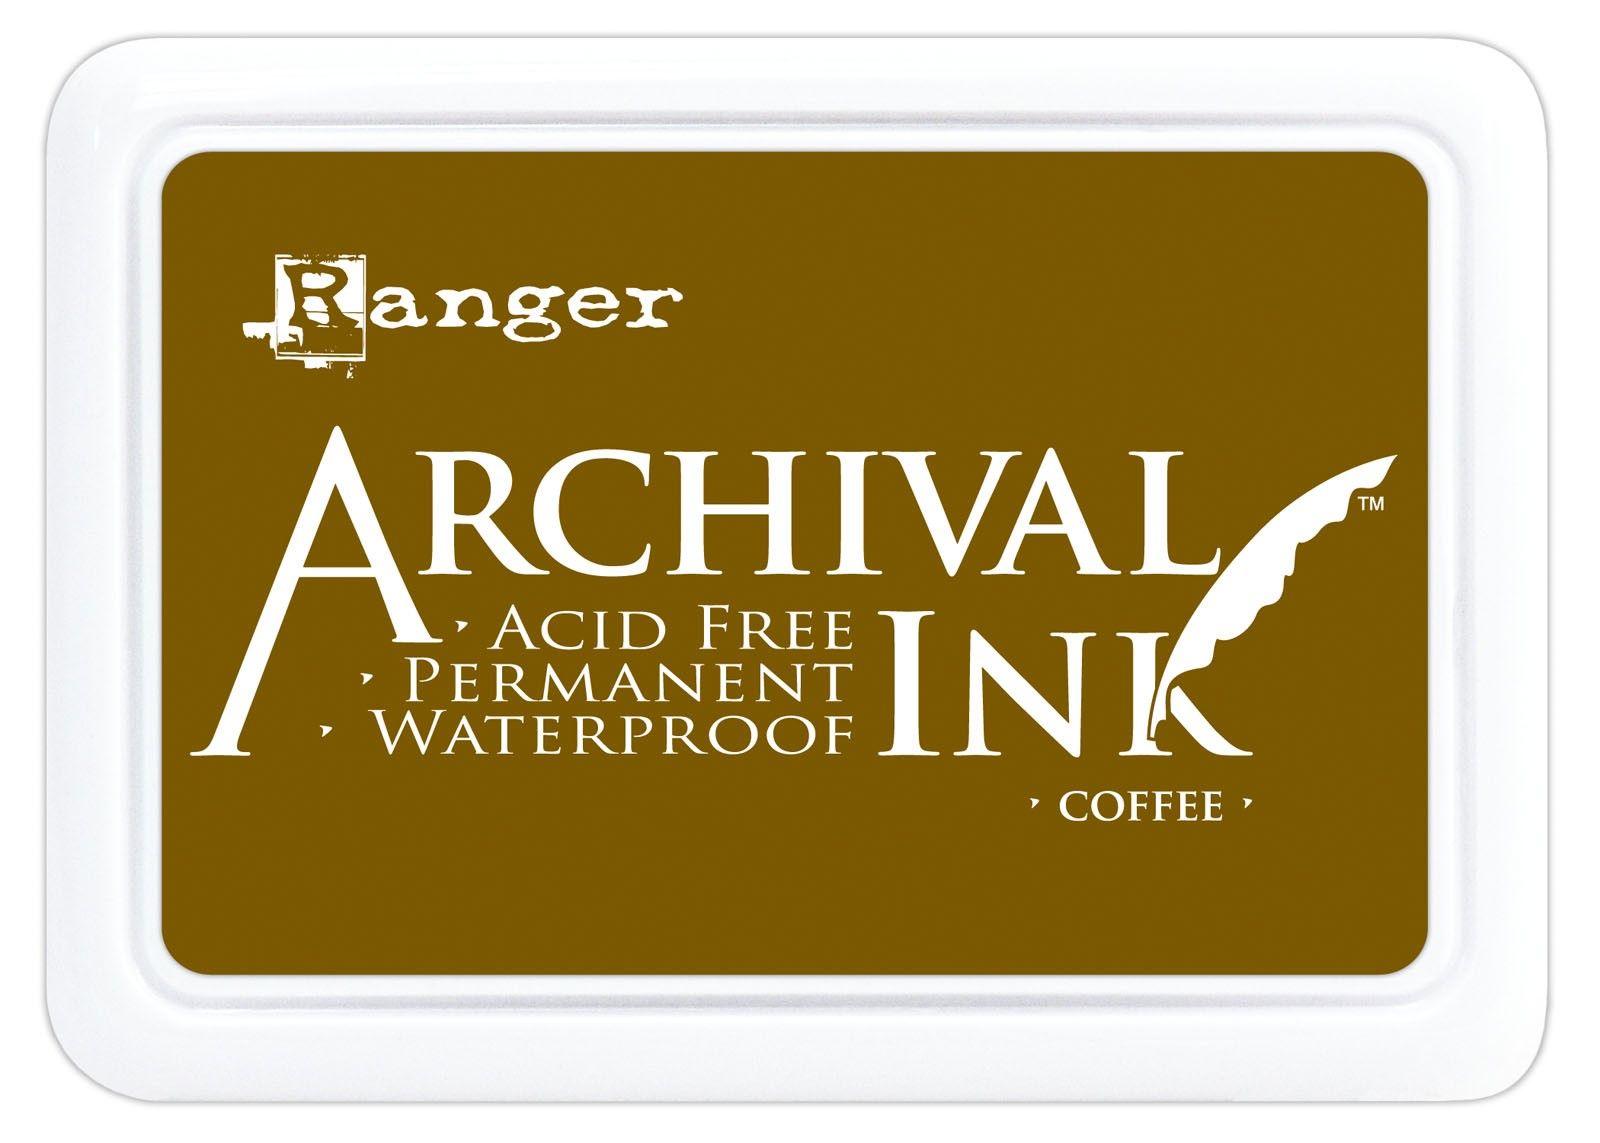 Ranger Archival Ink Pad #0 - Coffee